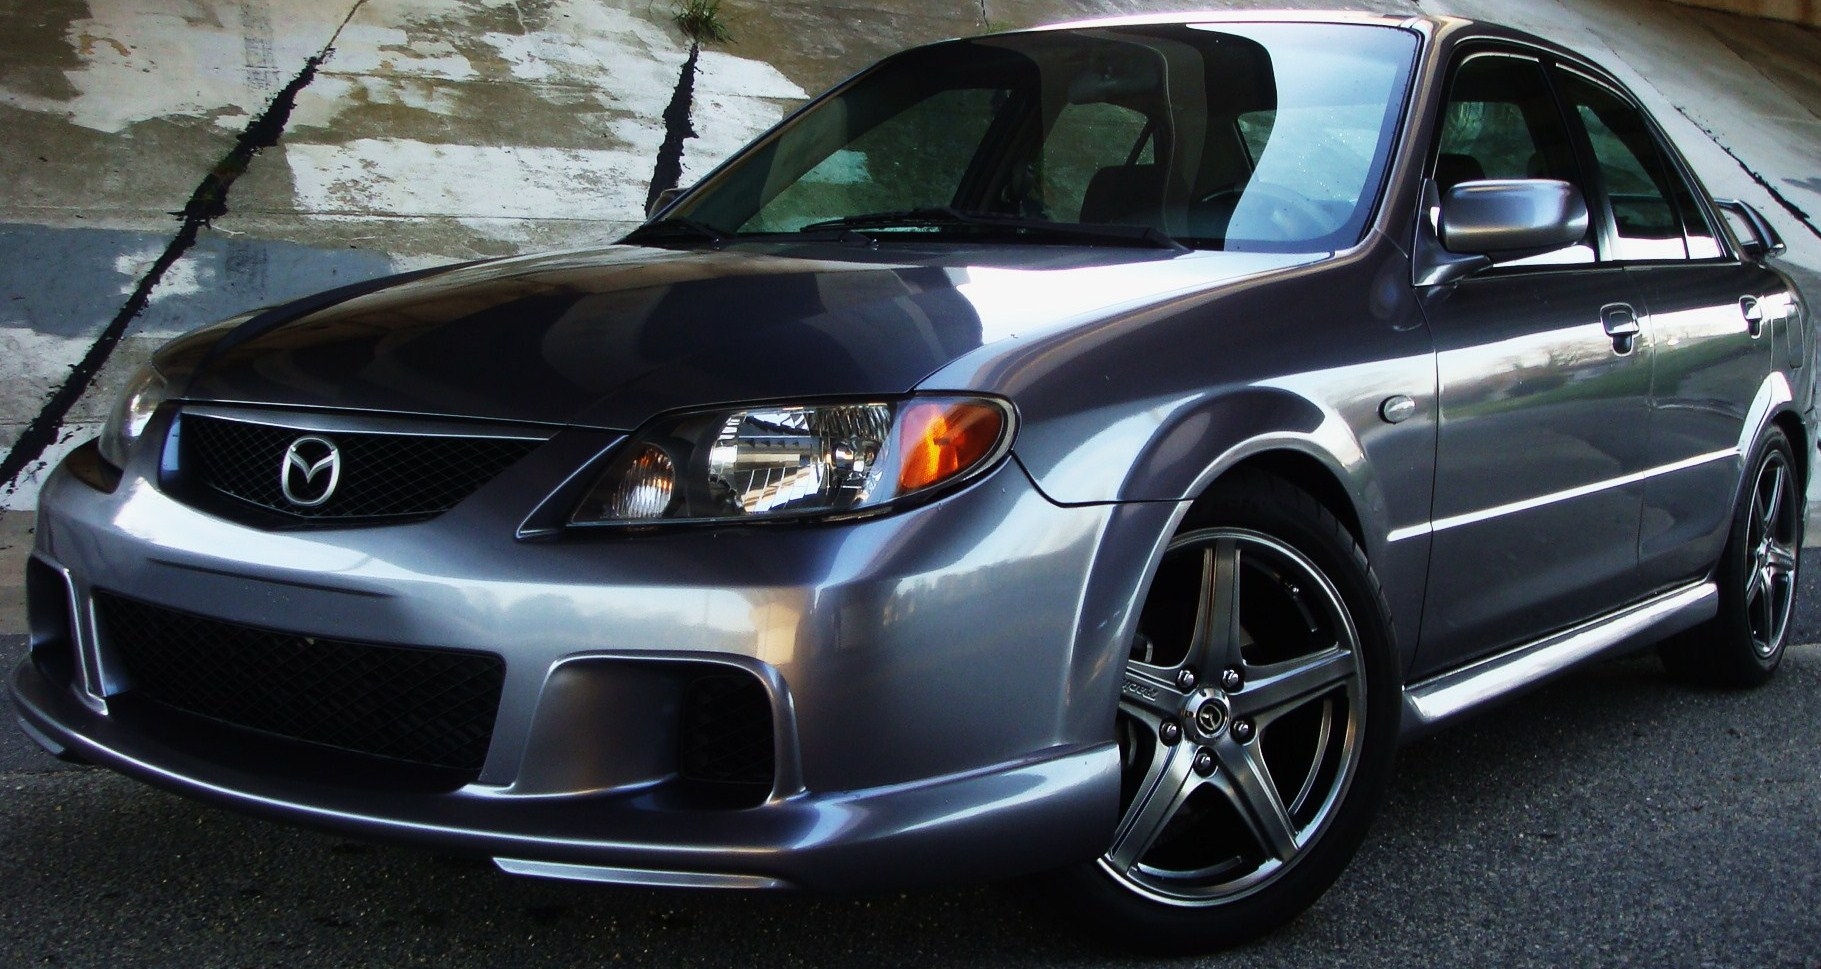 2003 Mazda Mazdaspeed Protege - Information and photos - MOMENTcar